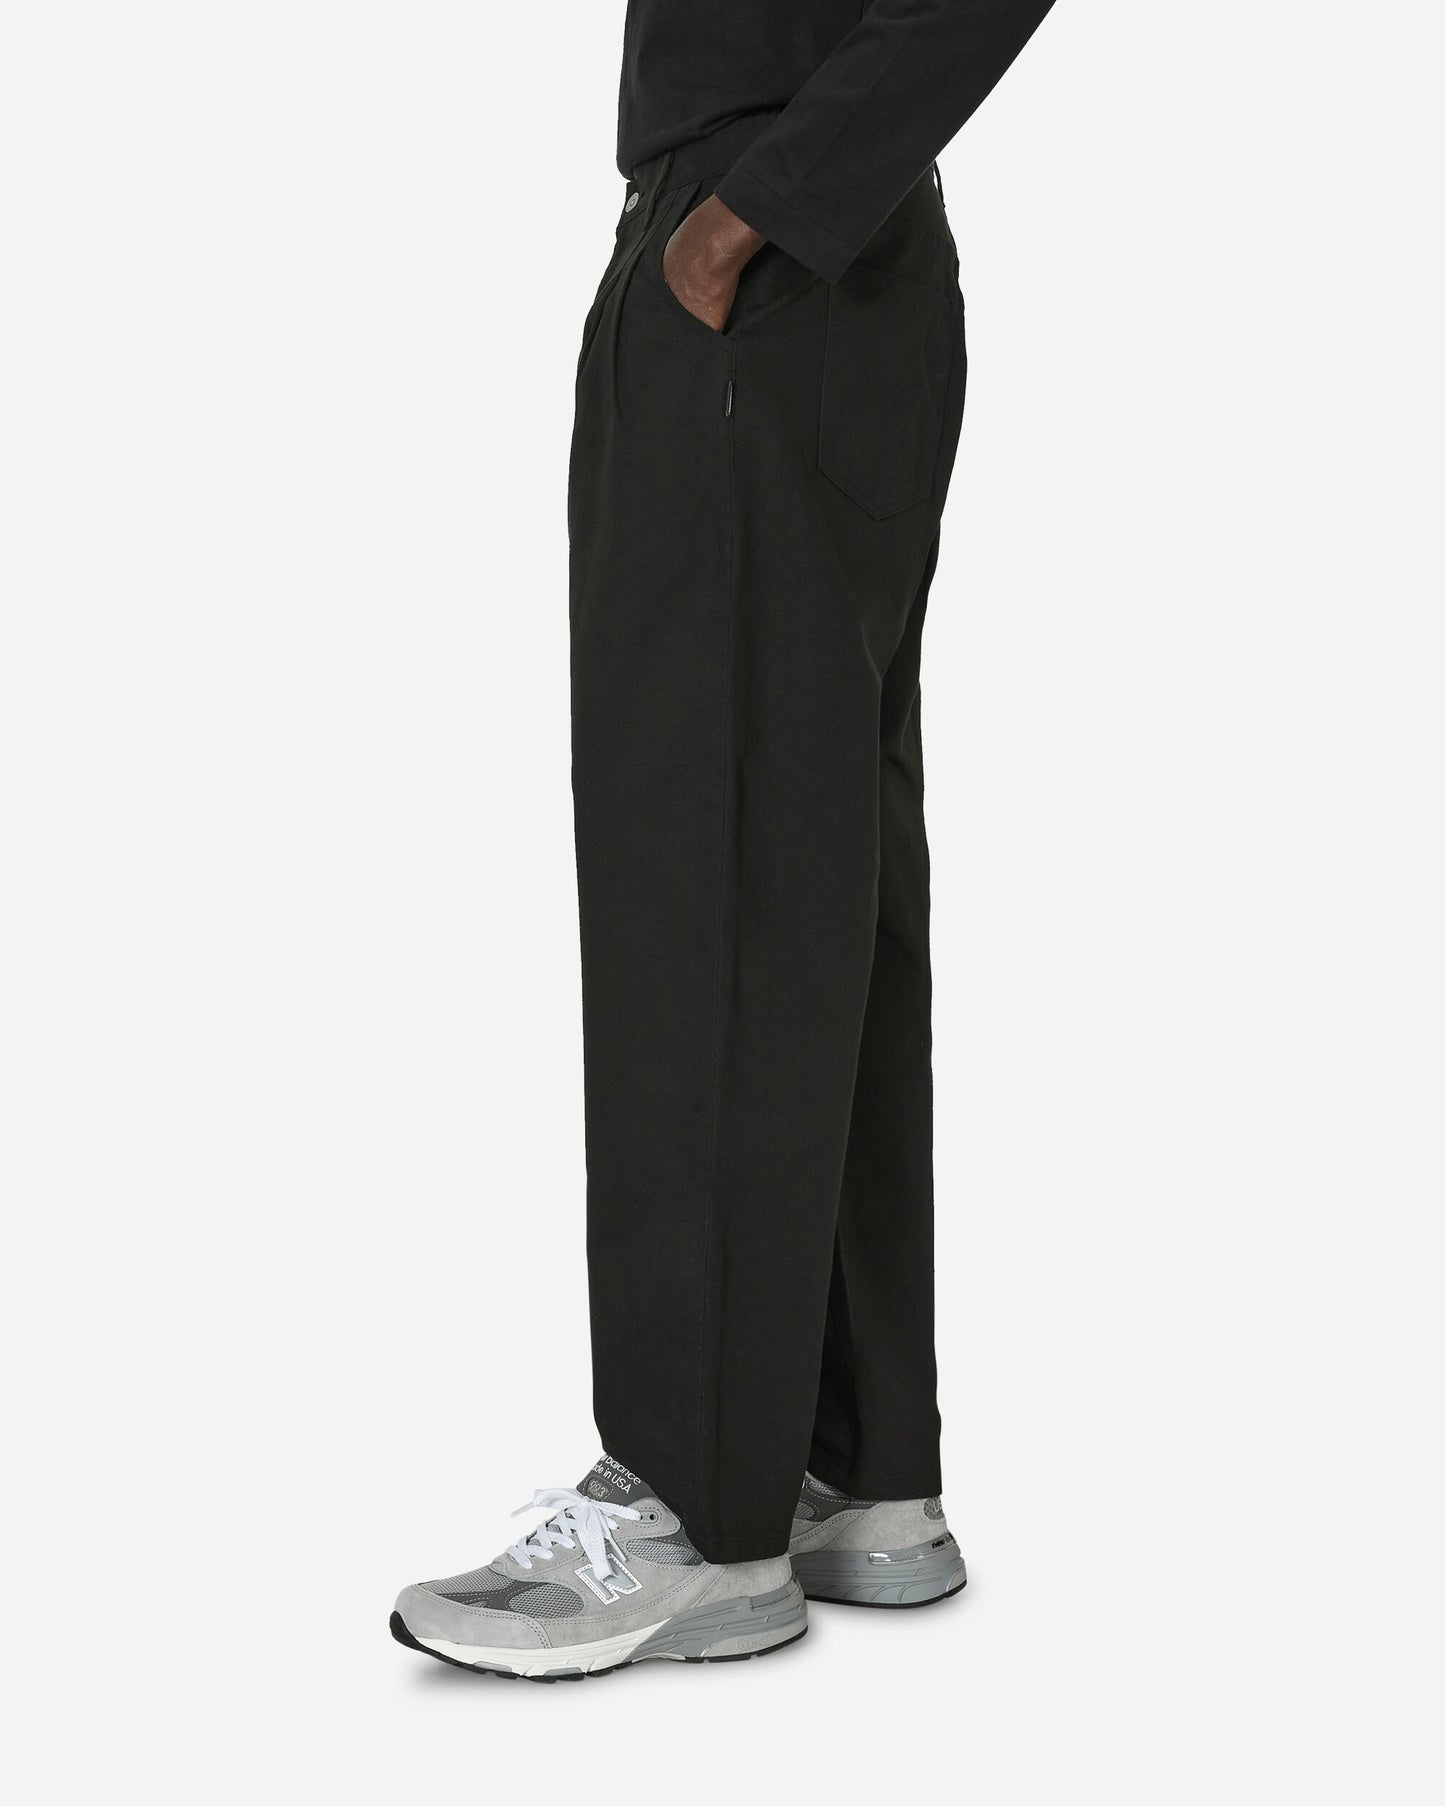 Neighborhood Baggysilhouette Two Tuck Pants Black Pants Casual 241YTNH-PTM05 BK